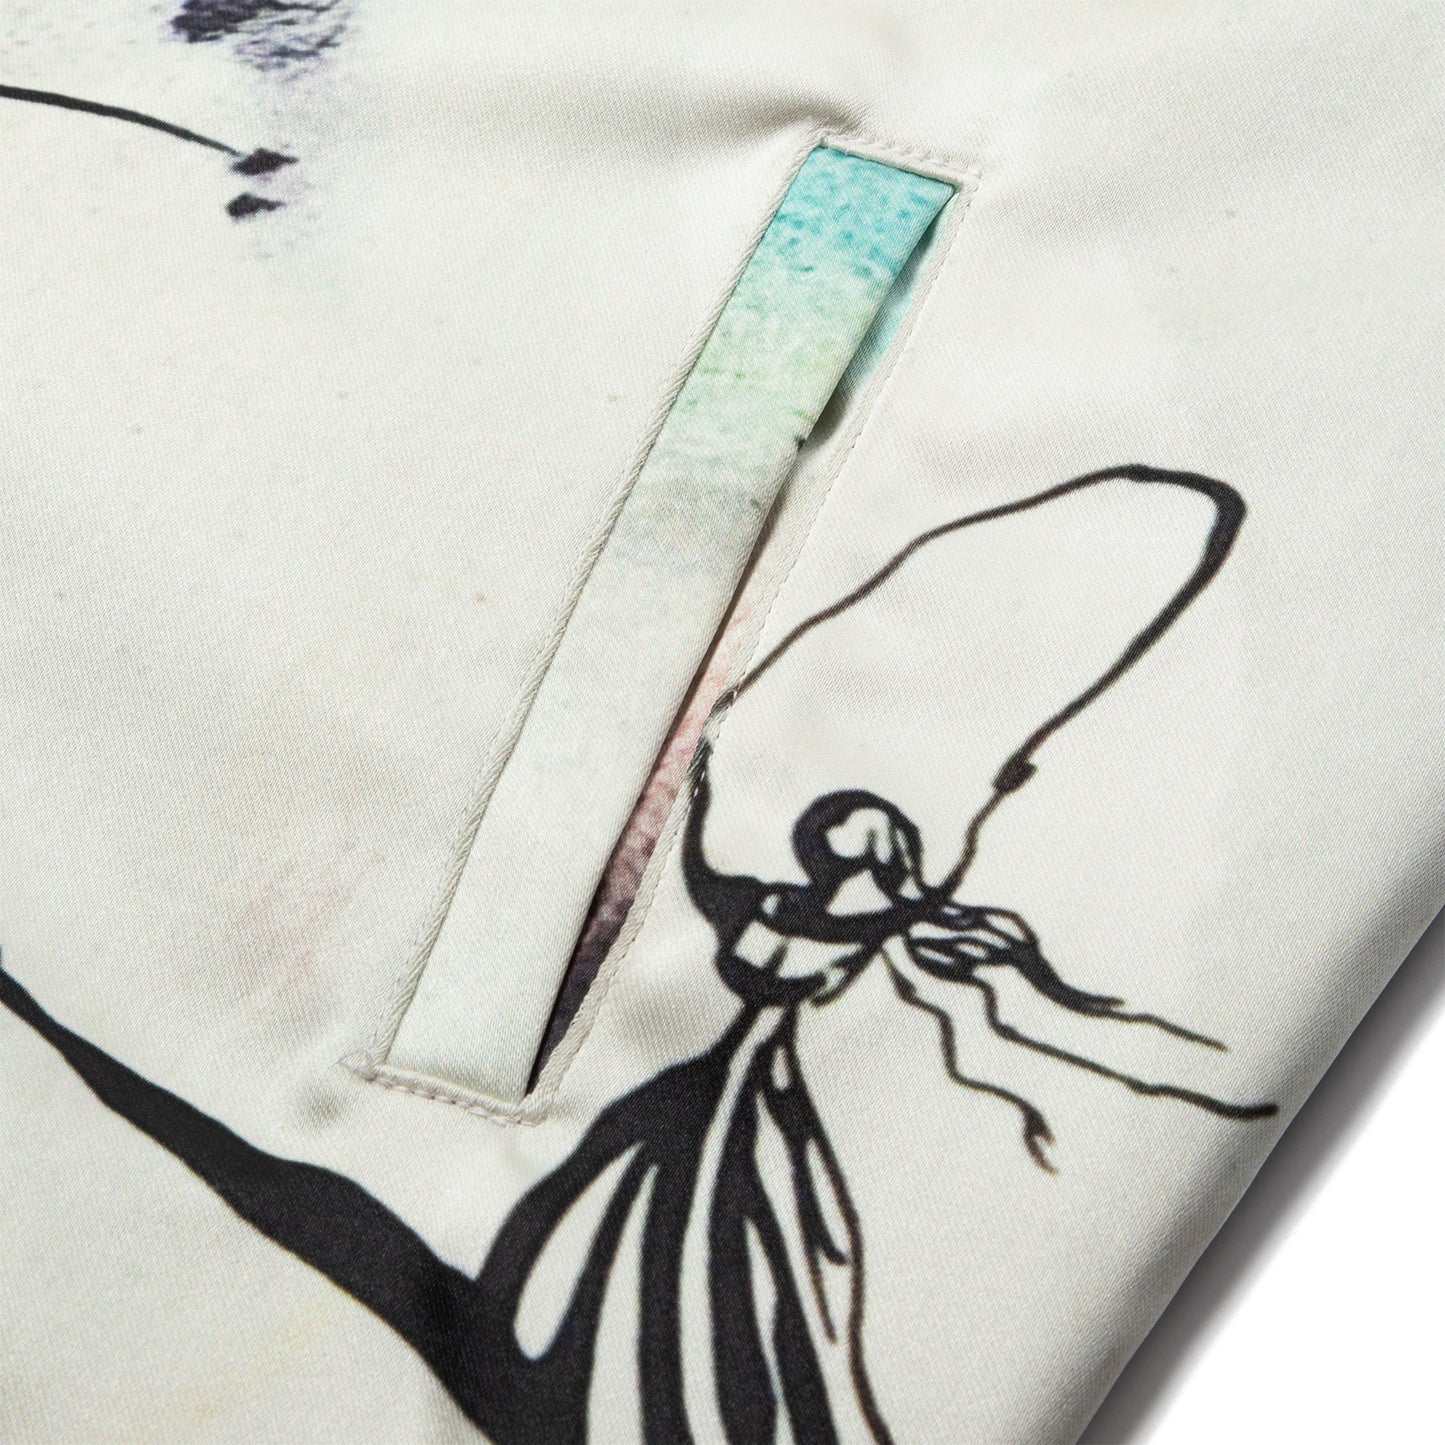 Concepts x Salvador Dali 'The Lobster Quadrille' Coaches Jacket (Multi)